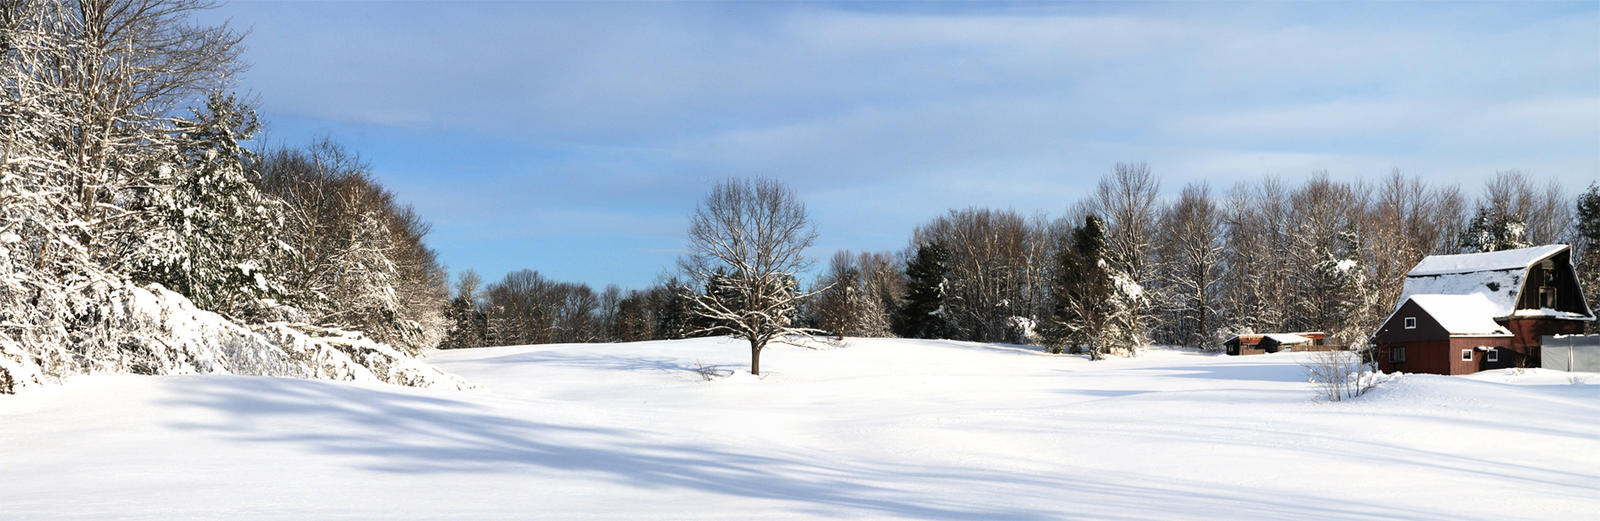 Maine Winter Scenery Heres a nice winter scene